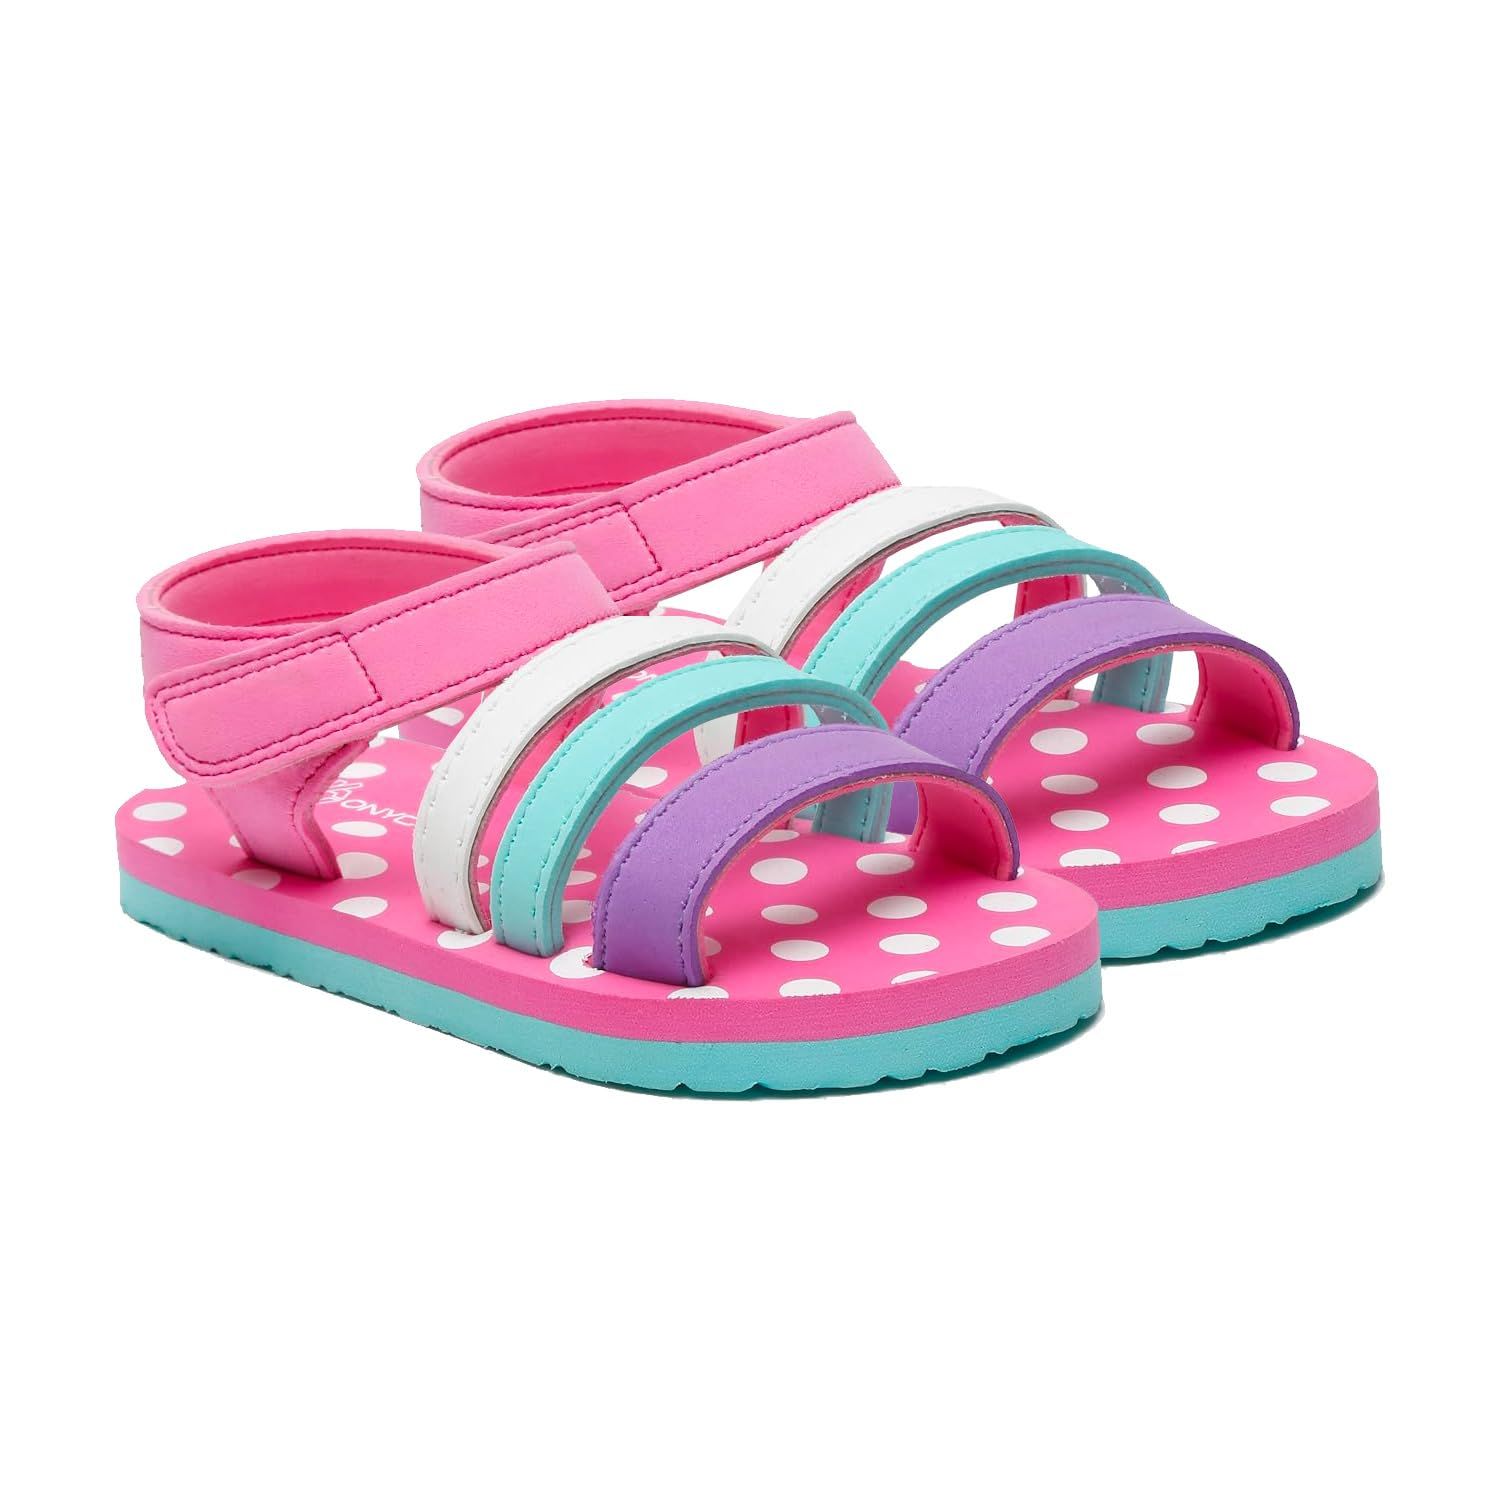 ONYC Premium Butterscotch Kids Sandals for Girls, Pink Slippers